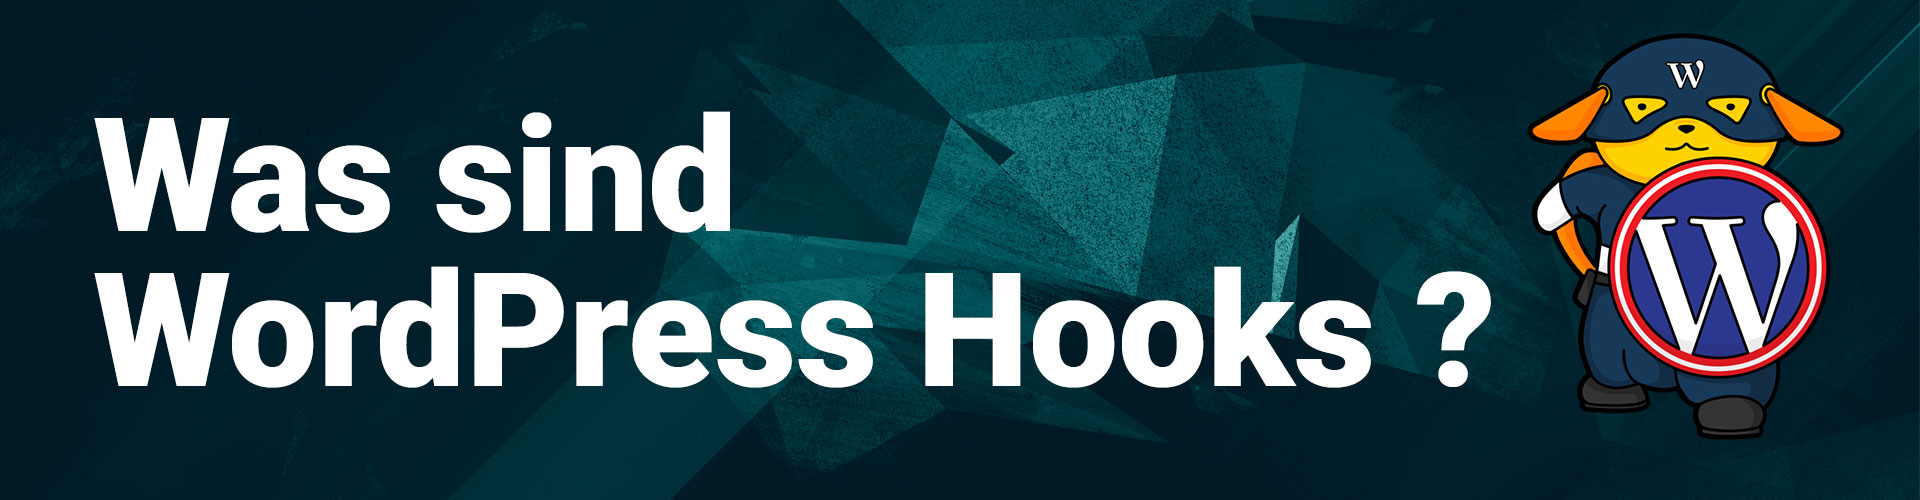 Was sind WordPress Hooks?